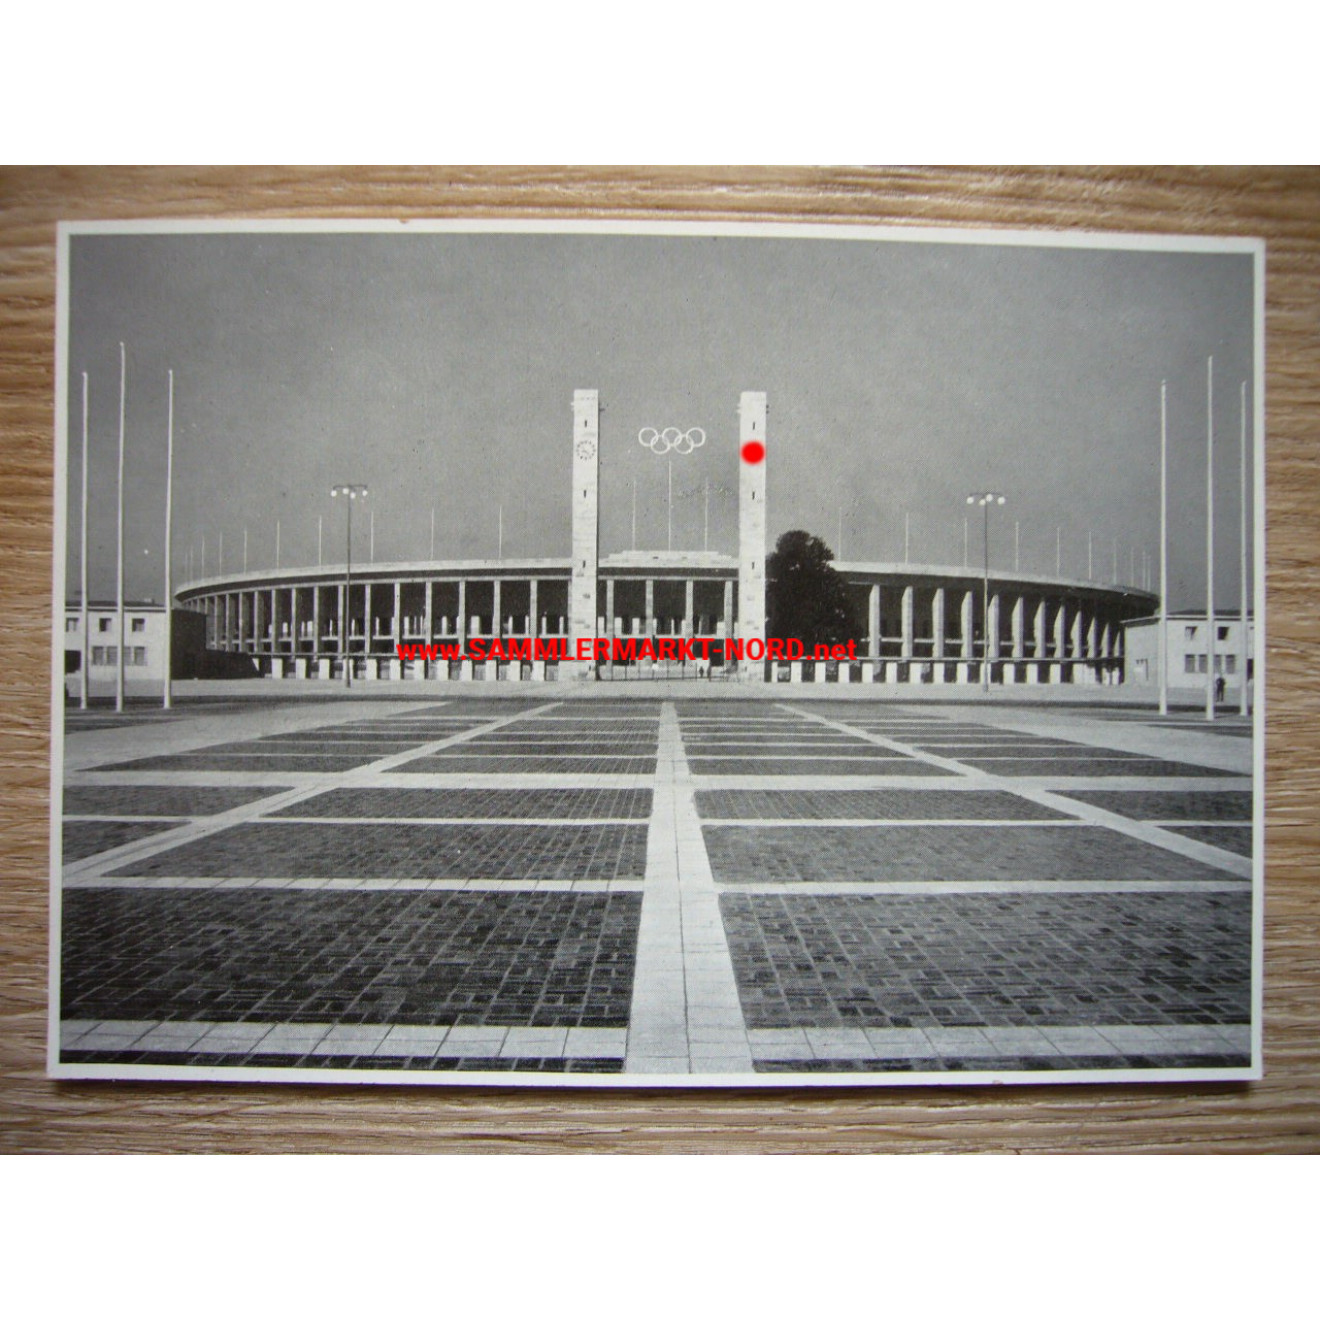 Postkarte - Berlin Olympiade 1936 - Reichssportfeld Stadium